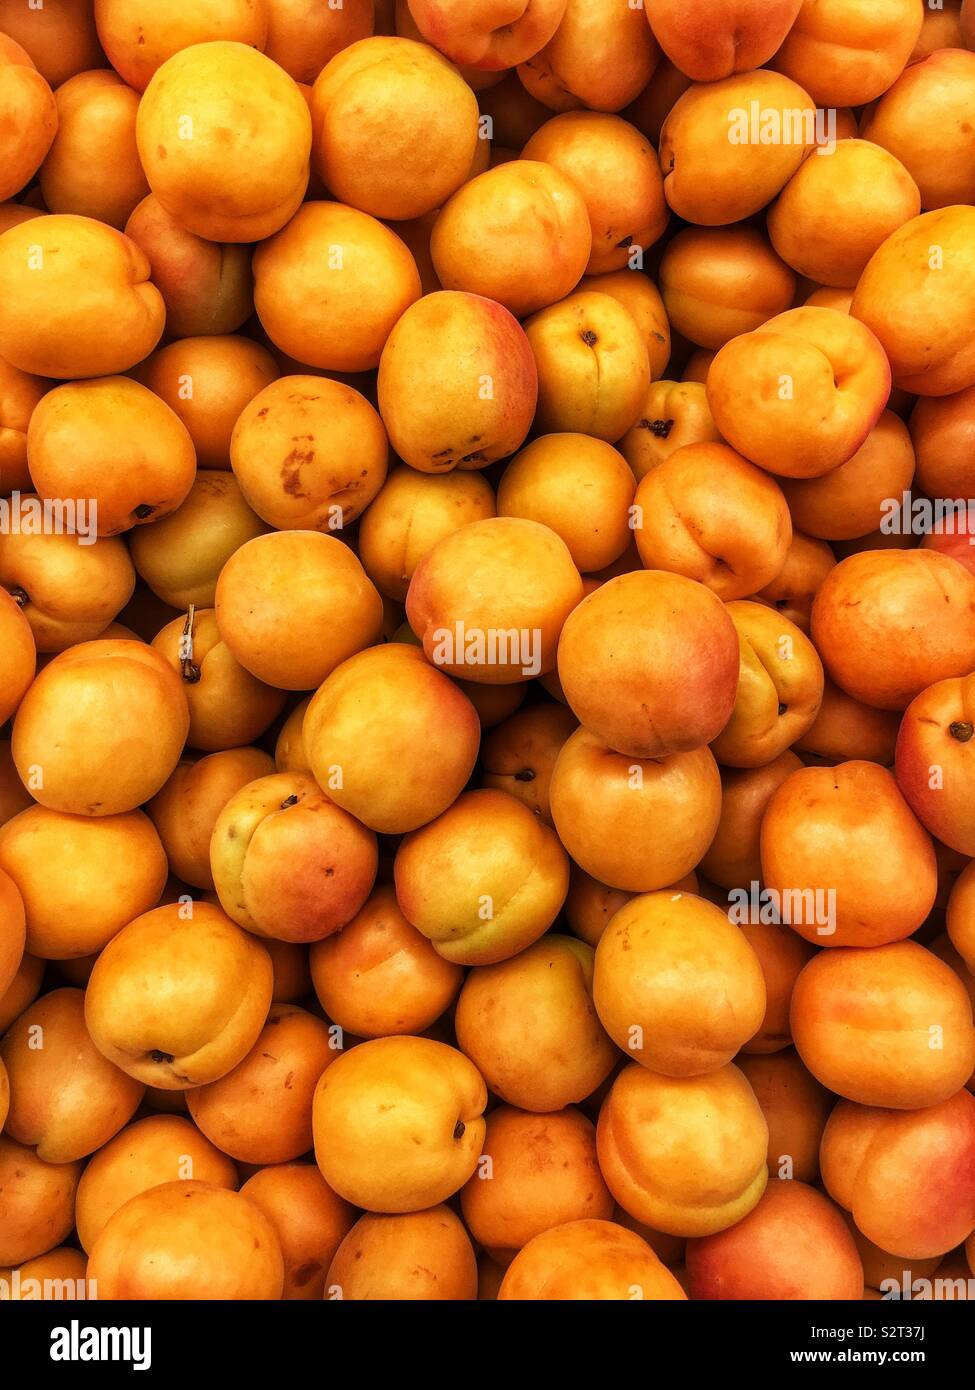 Full frame of many farm fresh orange apricots. Stock Photo